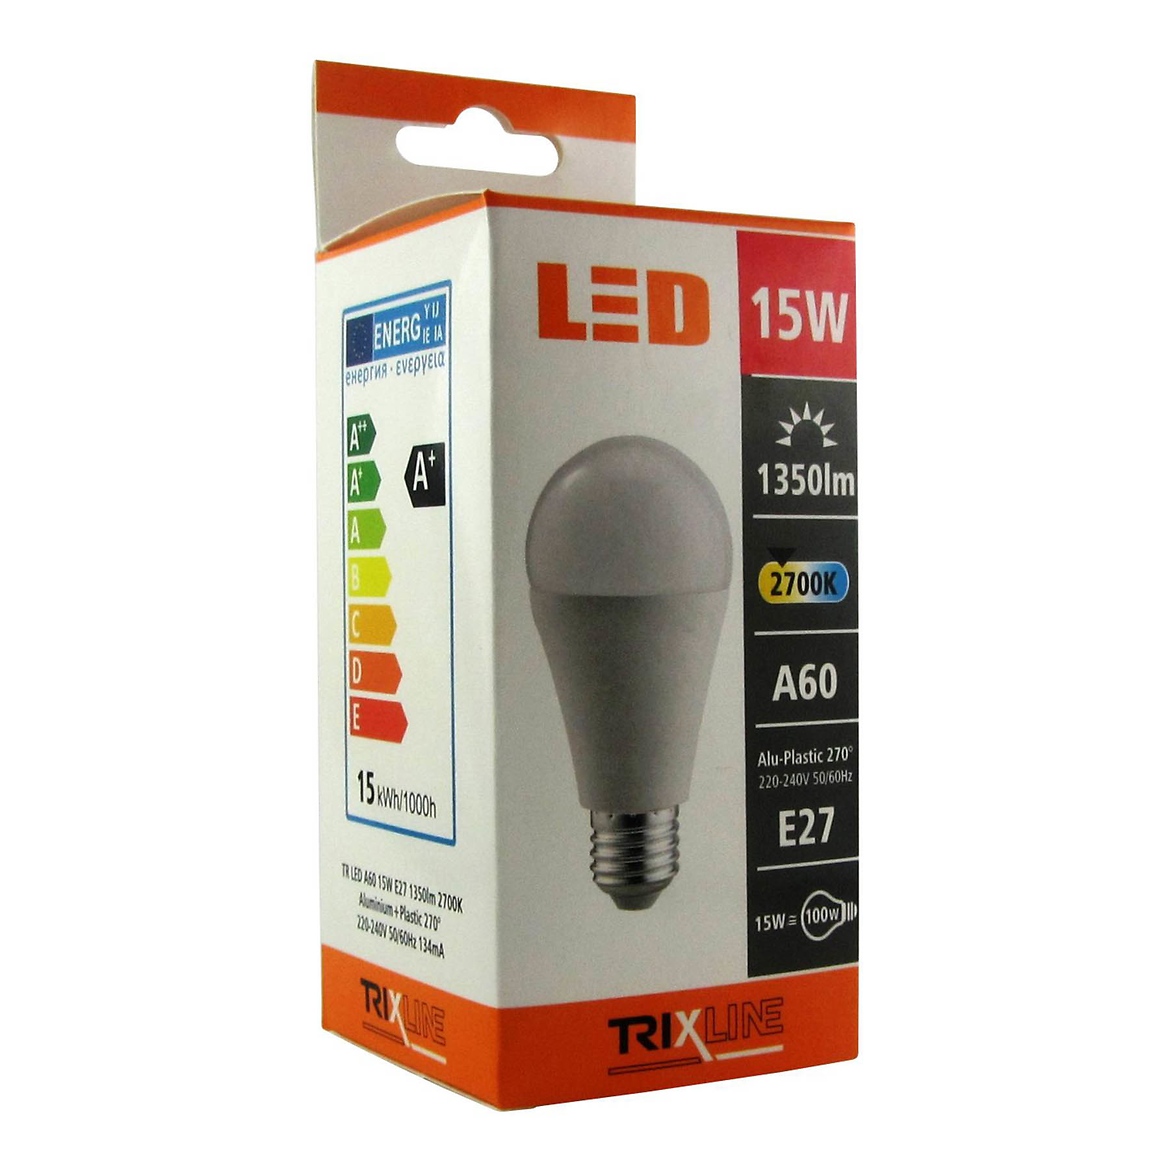 Glühbirne BC 15W TR LED E27 A60 2700K Trixline,3